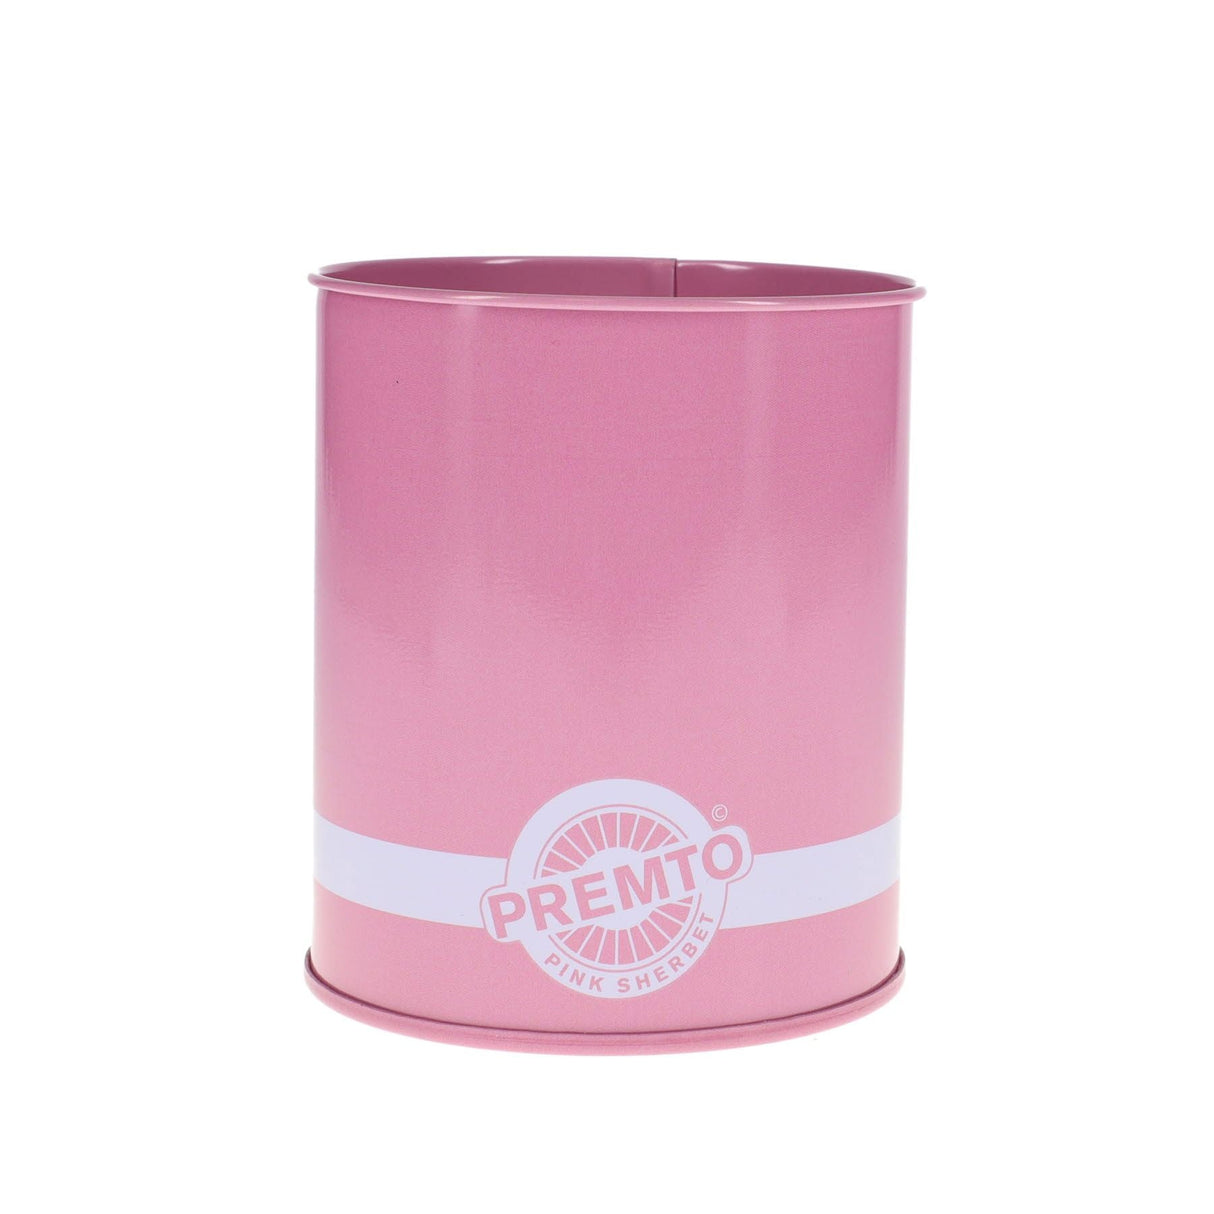 Premto Pastel Tin Pencil Pot - Pink Sherbet-Desk Tidy-Premto|StationeryShop.co.uk